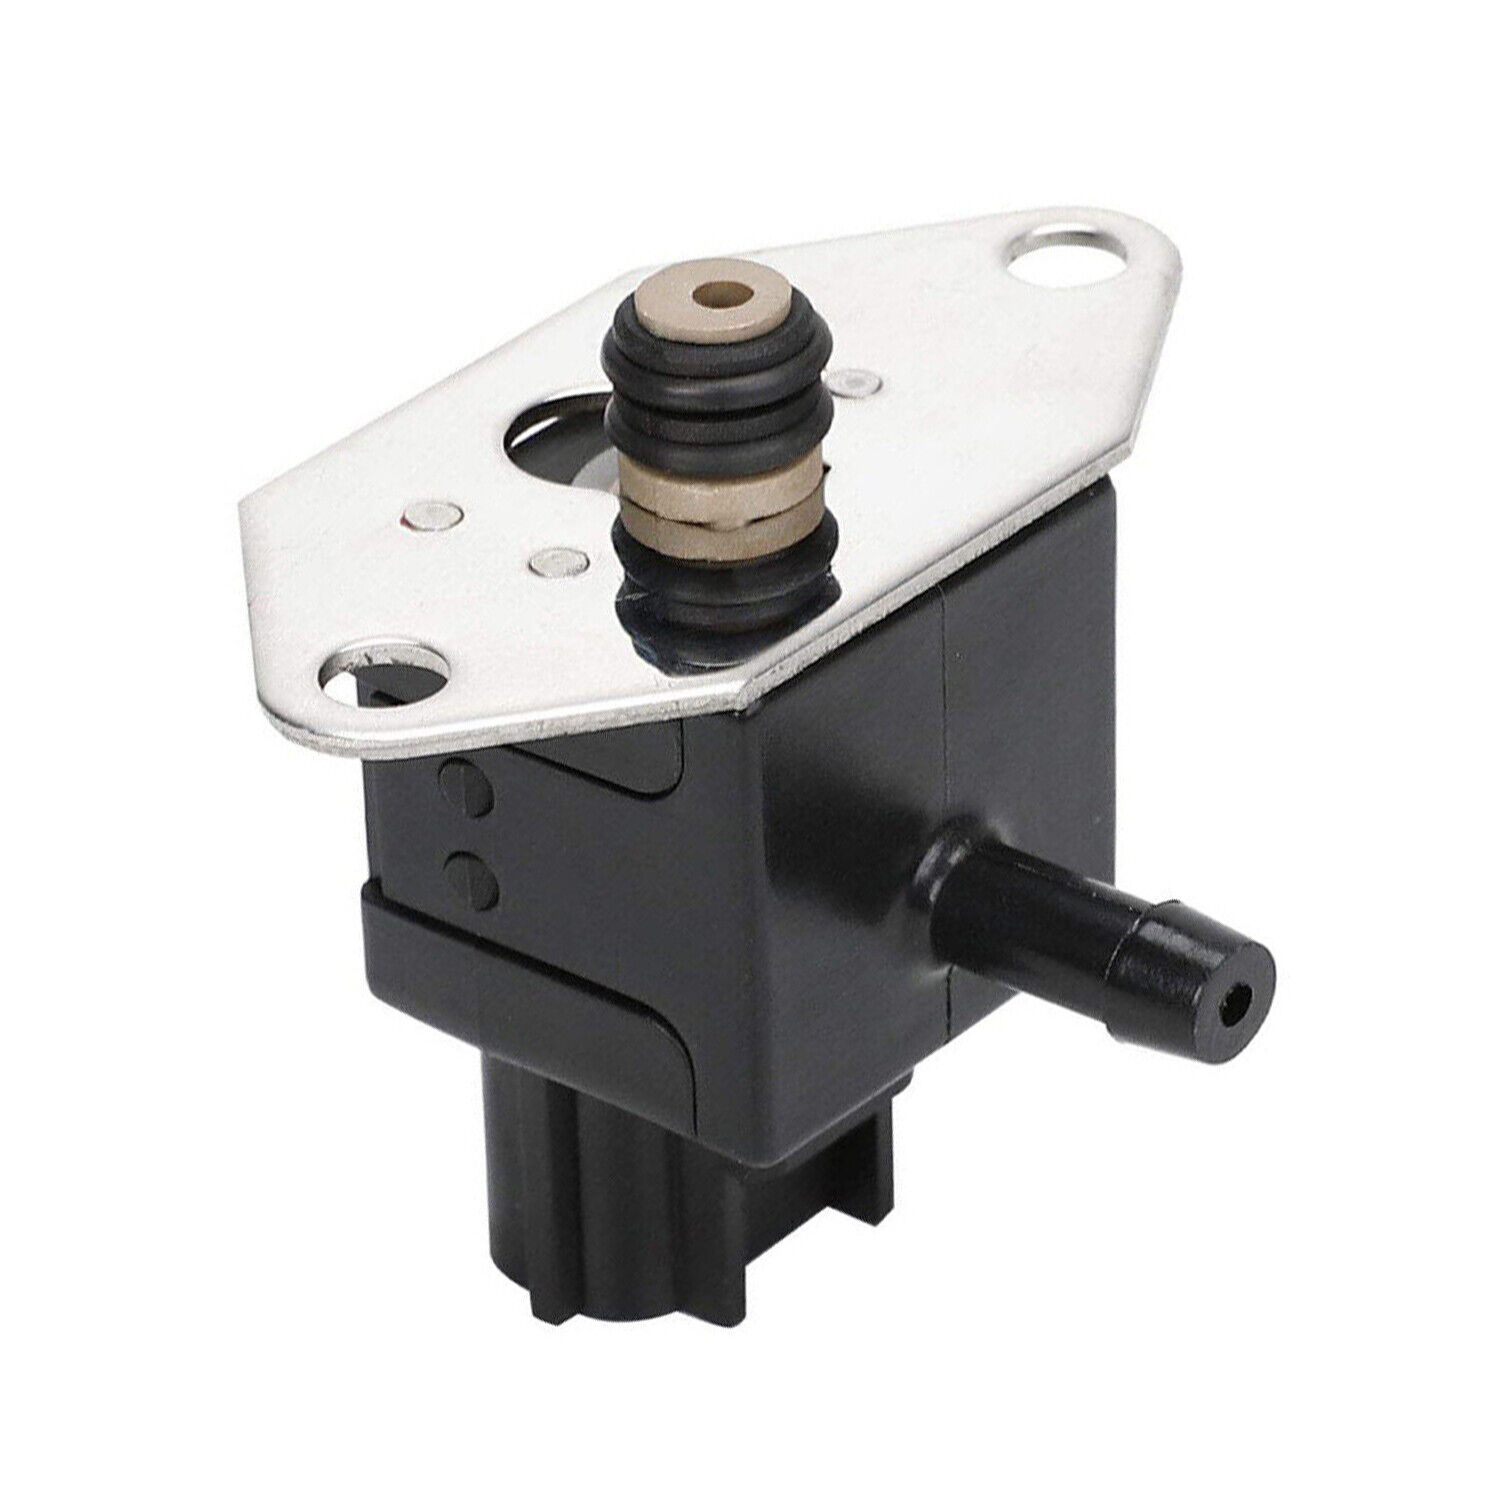 Fuel Injection Pressure Regulator Sensor Fit For Ford E-150 E-250 F-150 3R3E9F972AA - image 1 of 5